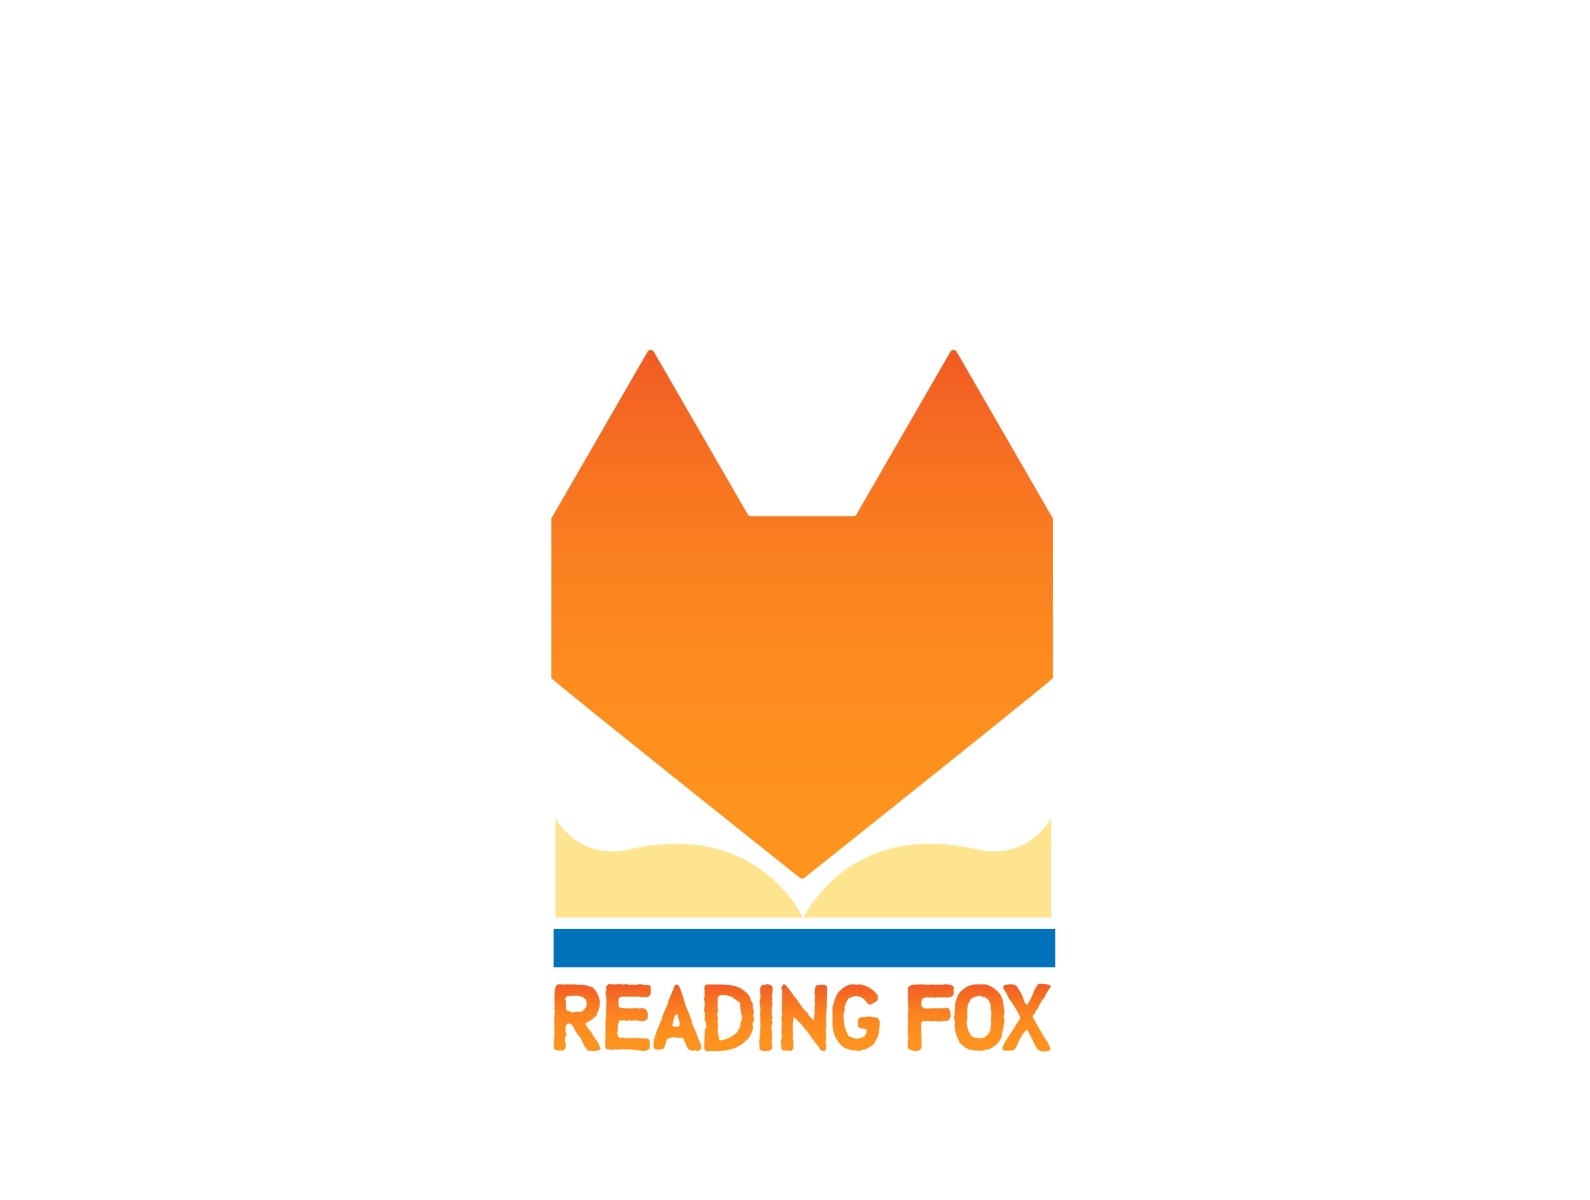 Reading fox. Логотип лисы. Логотип лиса книга. Логотип лиса с книжкой. Венчур Фокс логотип.